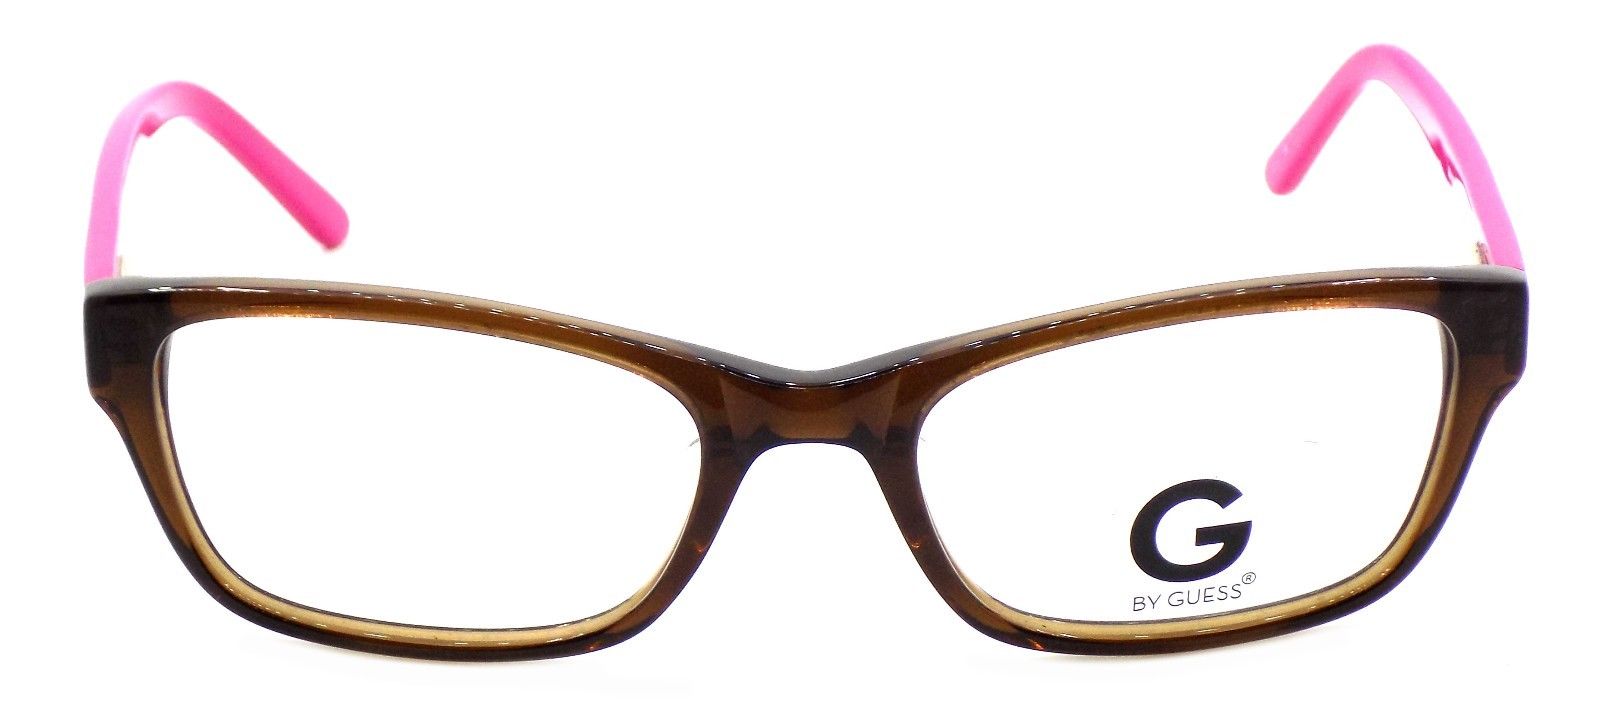 2-G by Guess GGA105 BRN Women's ASIAN FIT Eyeglasses Frames 52-18-135 Brown + Case-715583638778-IKSpecs